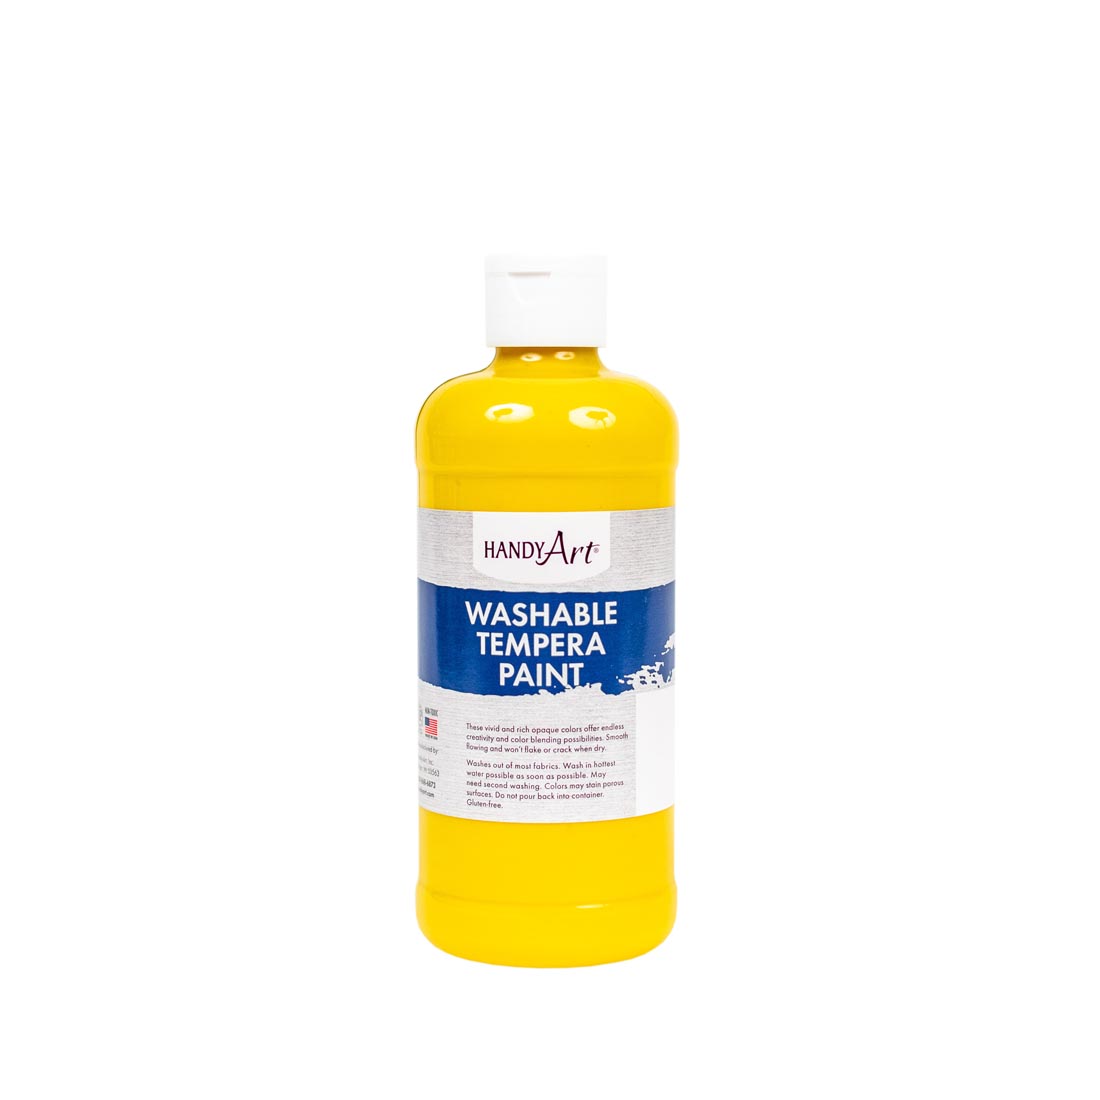 Pint bottle of Yellow Handy Art Washable Tempera Paint